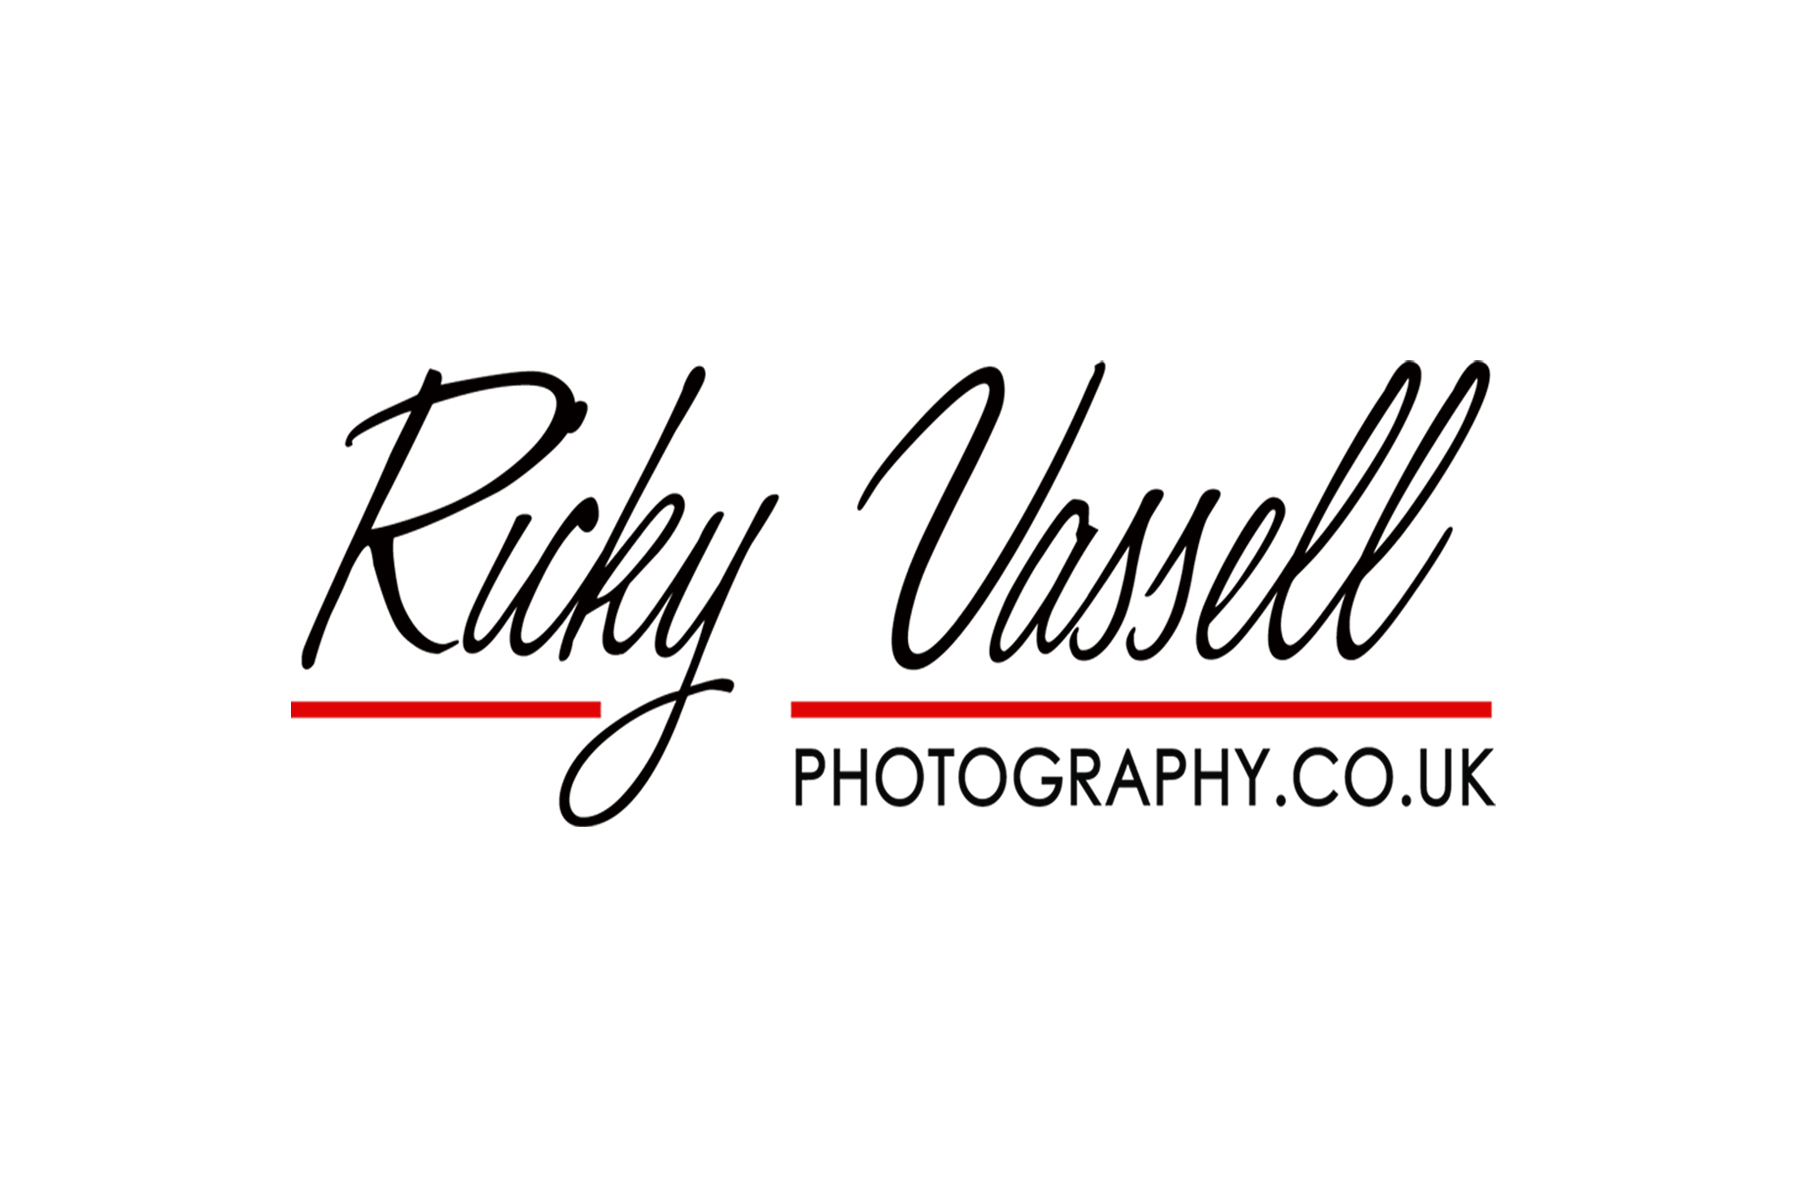 Ricky Vassell Photography